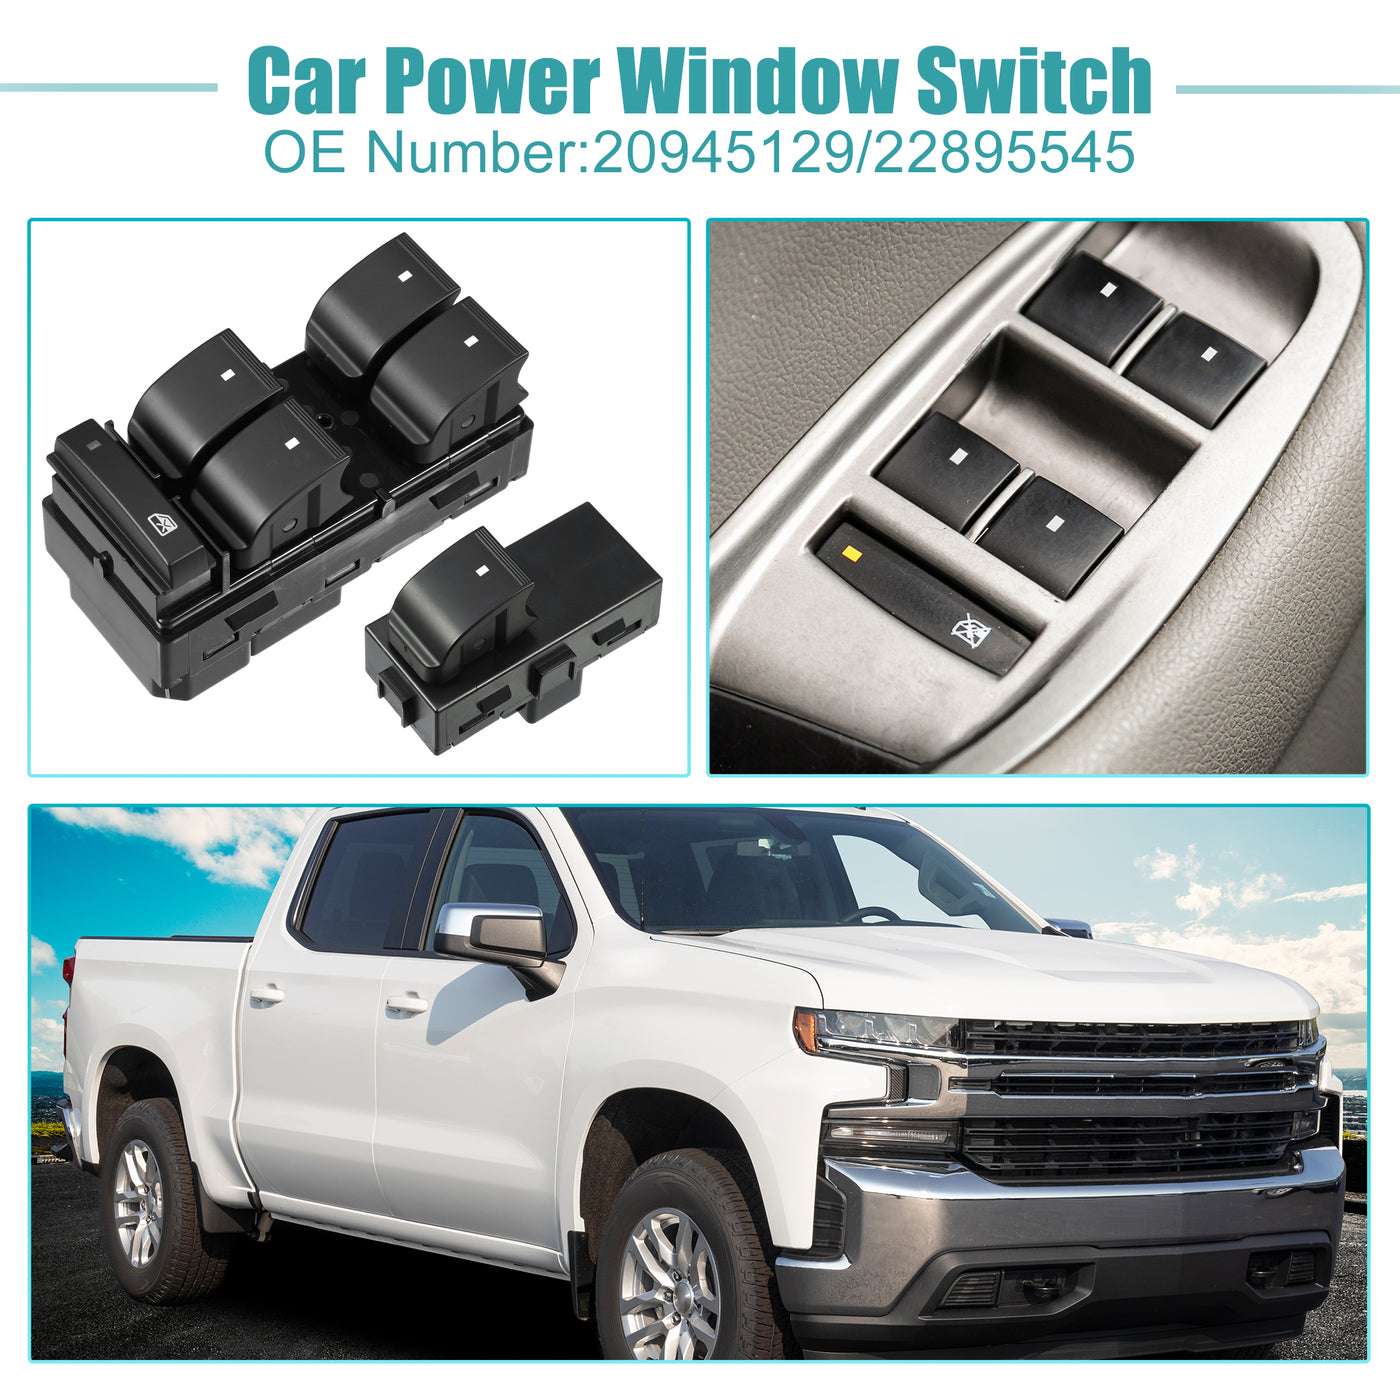 ACROPIX Power Window Switch Window Control Switch Fit for Chevrolet HHR Silverado Traverse No.20945129/22895545 - Pack of 4